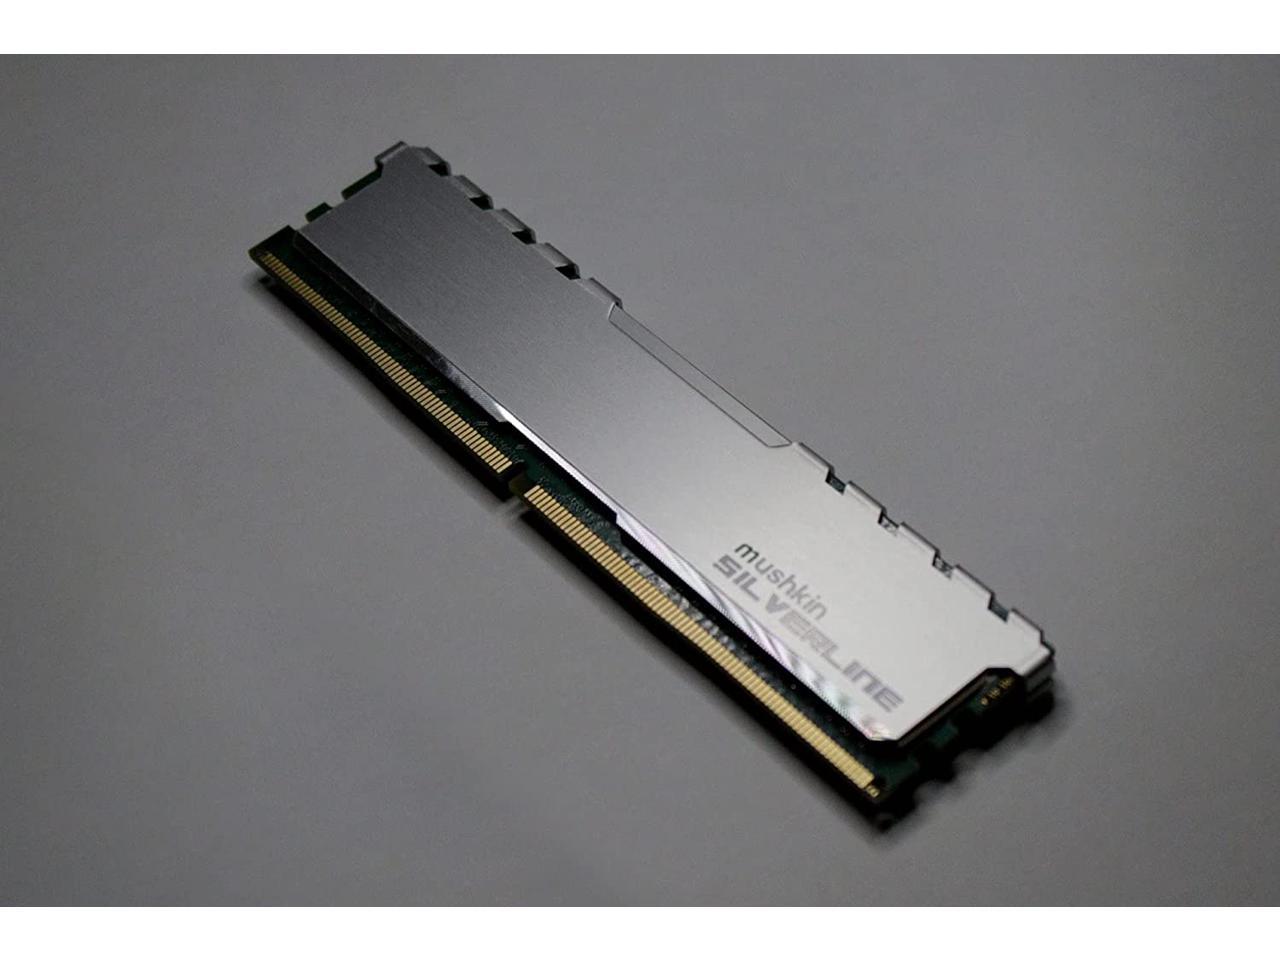 Mushkin 32GB(1X32GB) Silverline DDR4 PC4-3200 3200MHz UDIMM 22-22-22-52 Desktop Memory Model MSL4U320NF32G